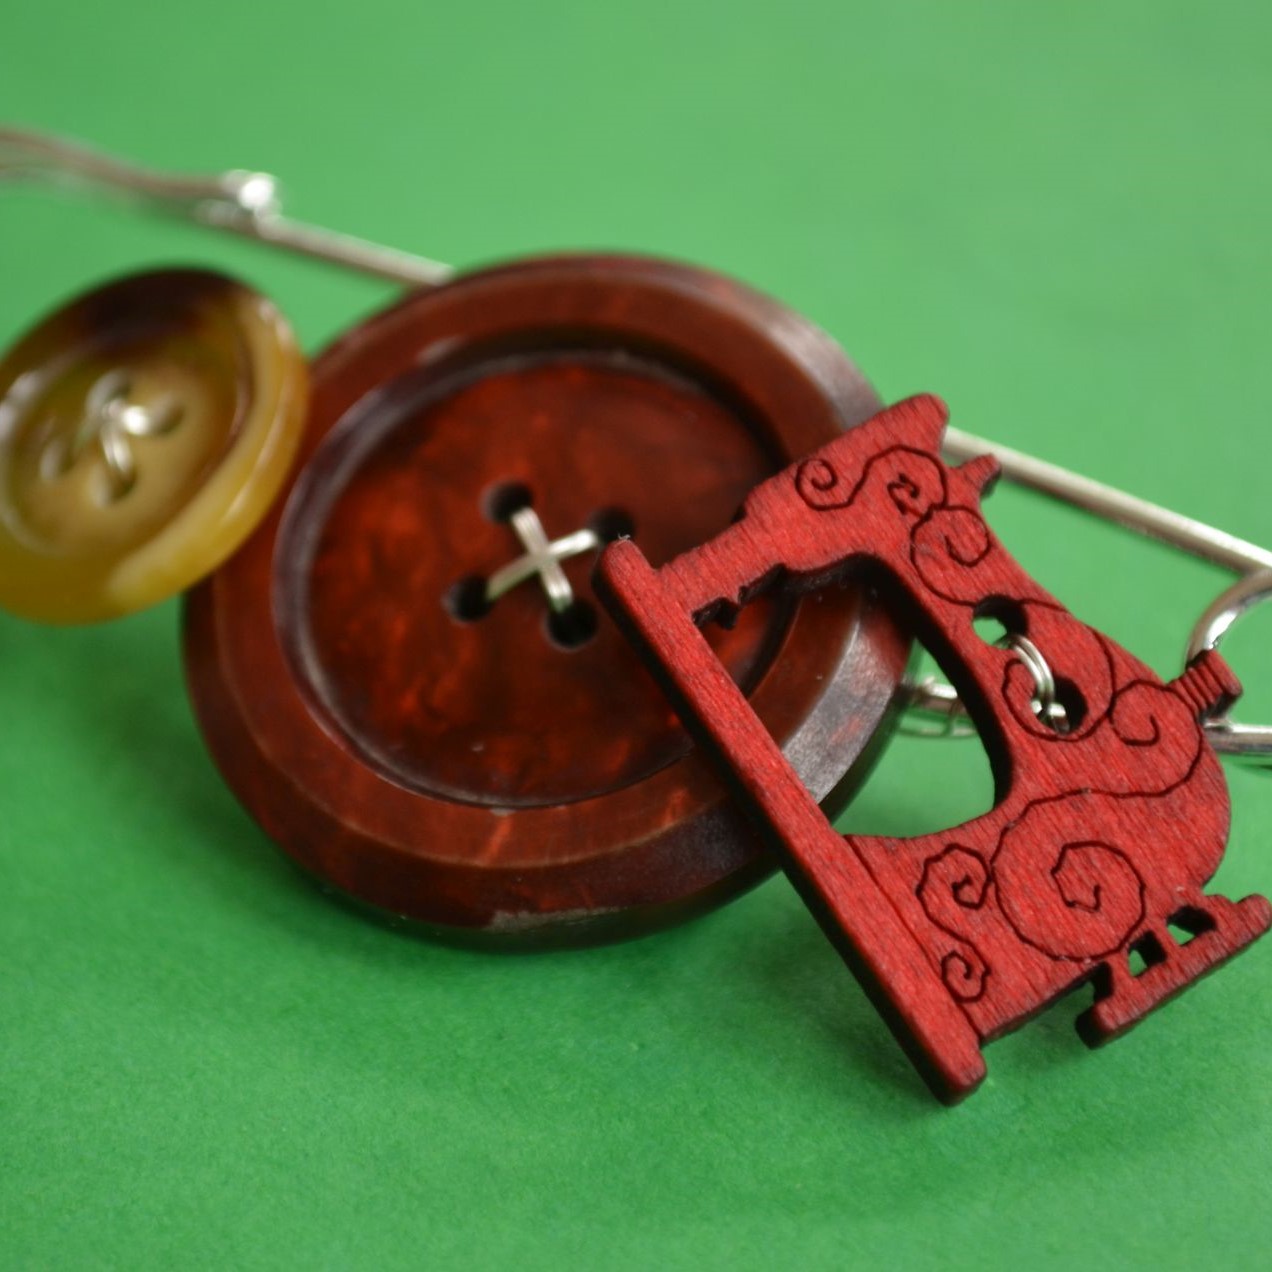 Sewing Machine Large Kilt Pin Brooch